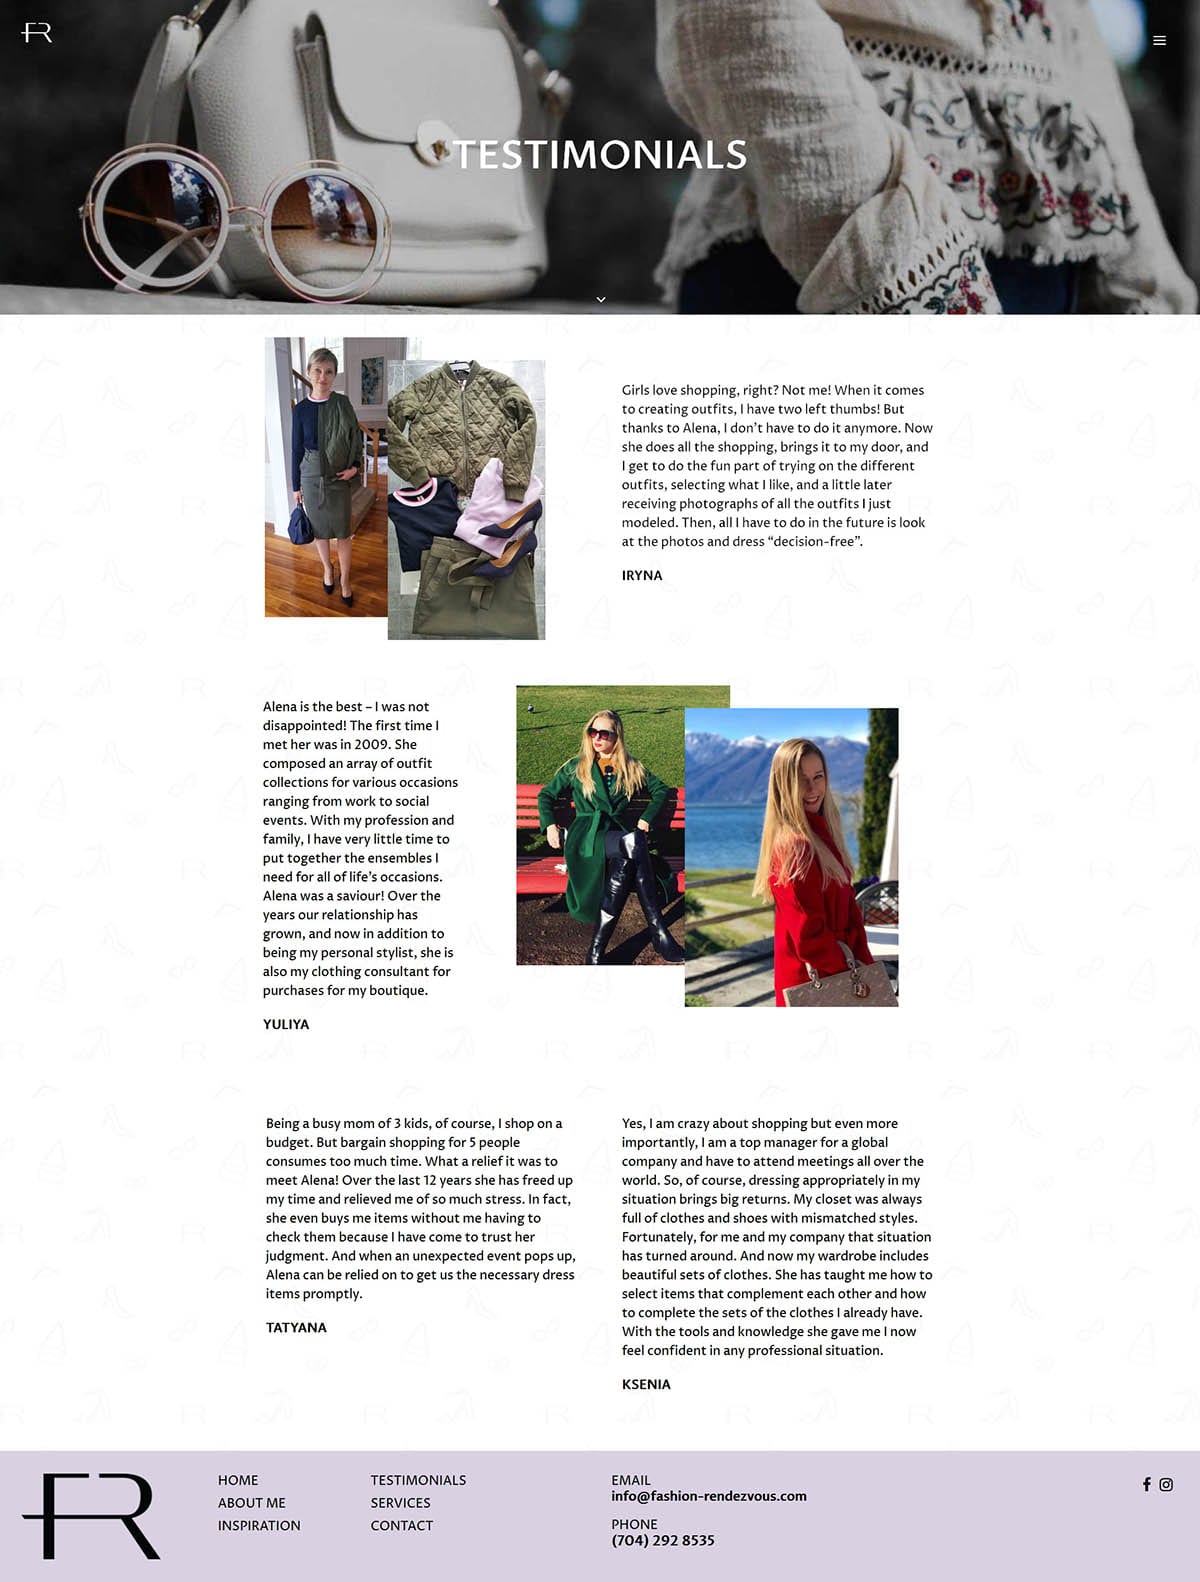 fashion rendezvous website screenshot testimonials page